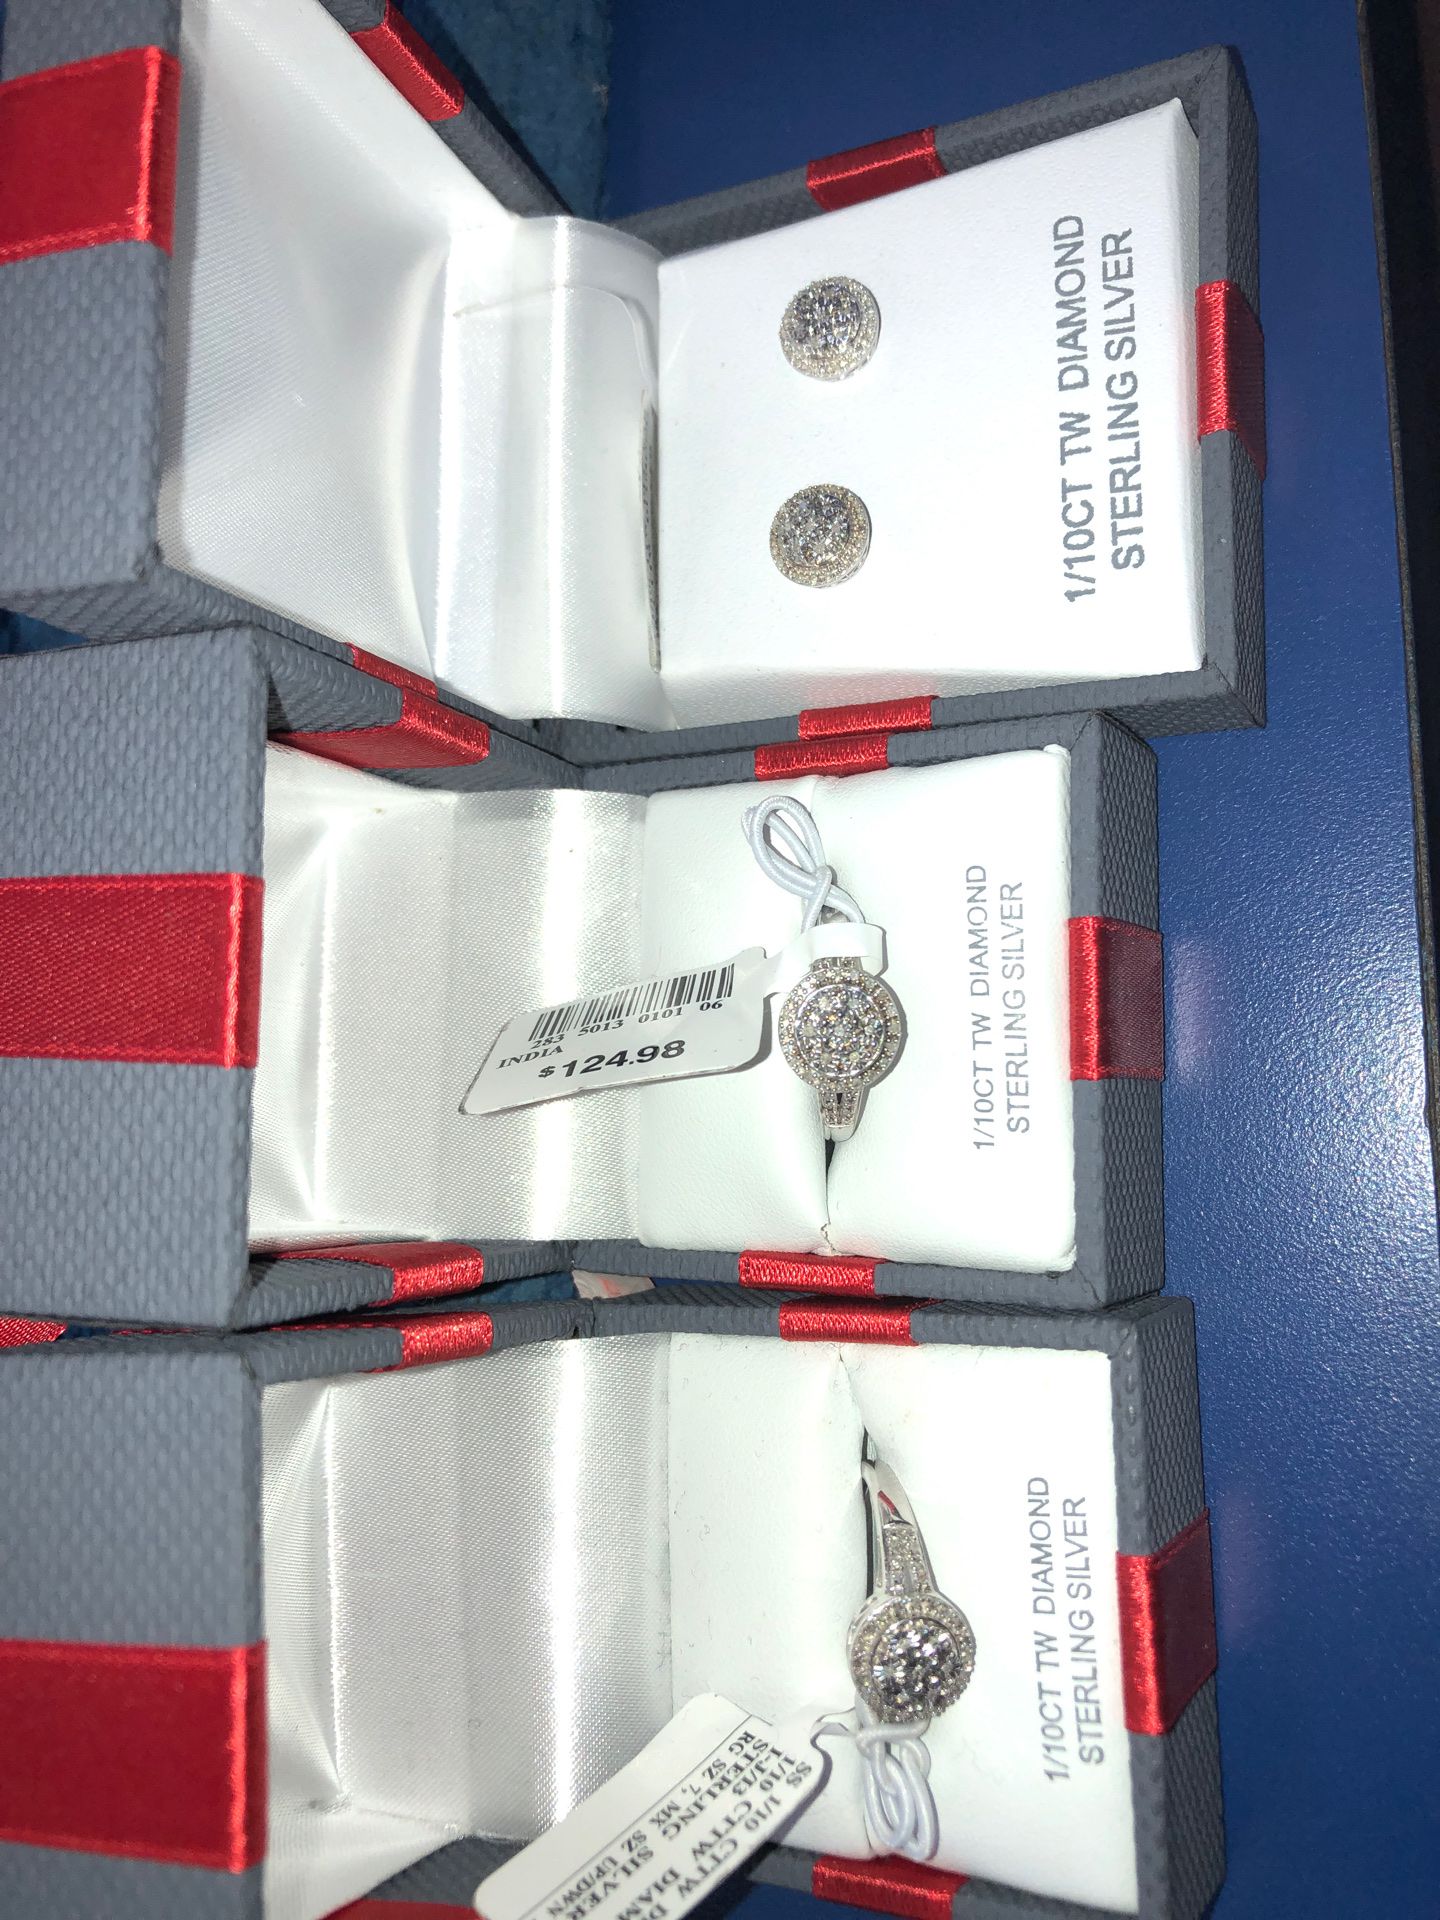 Diamond sterling silver earrings and rings